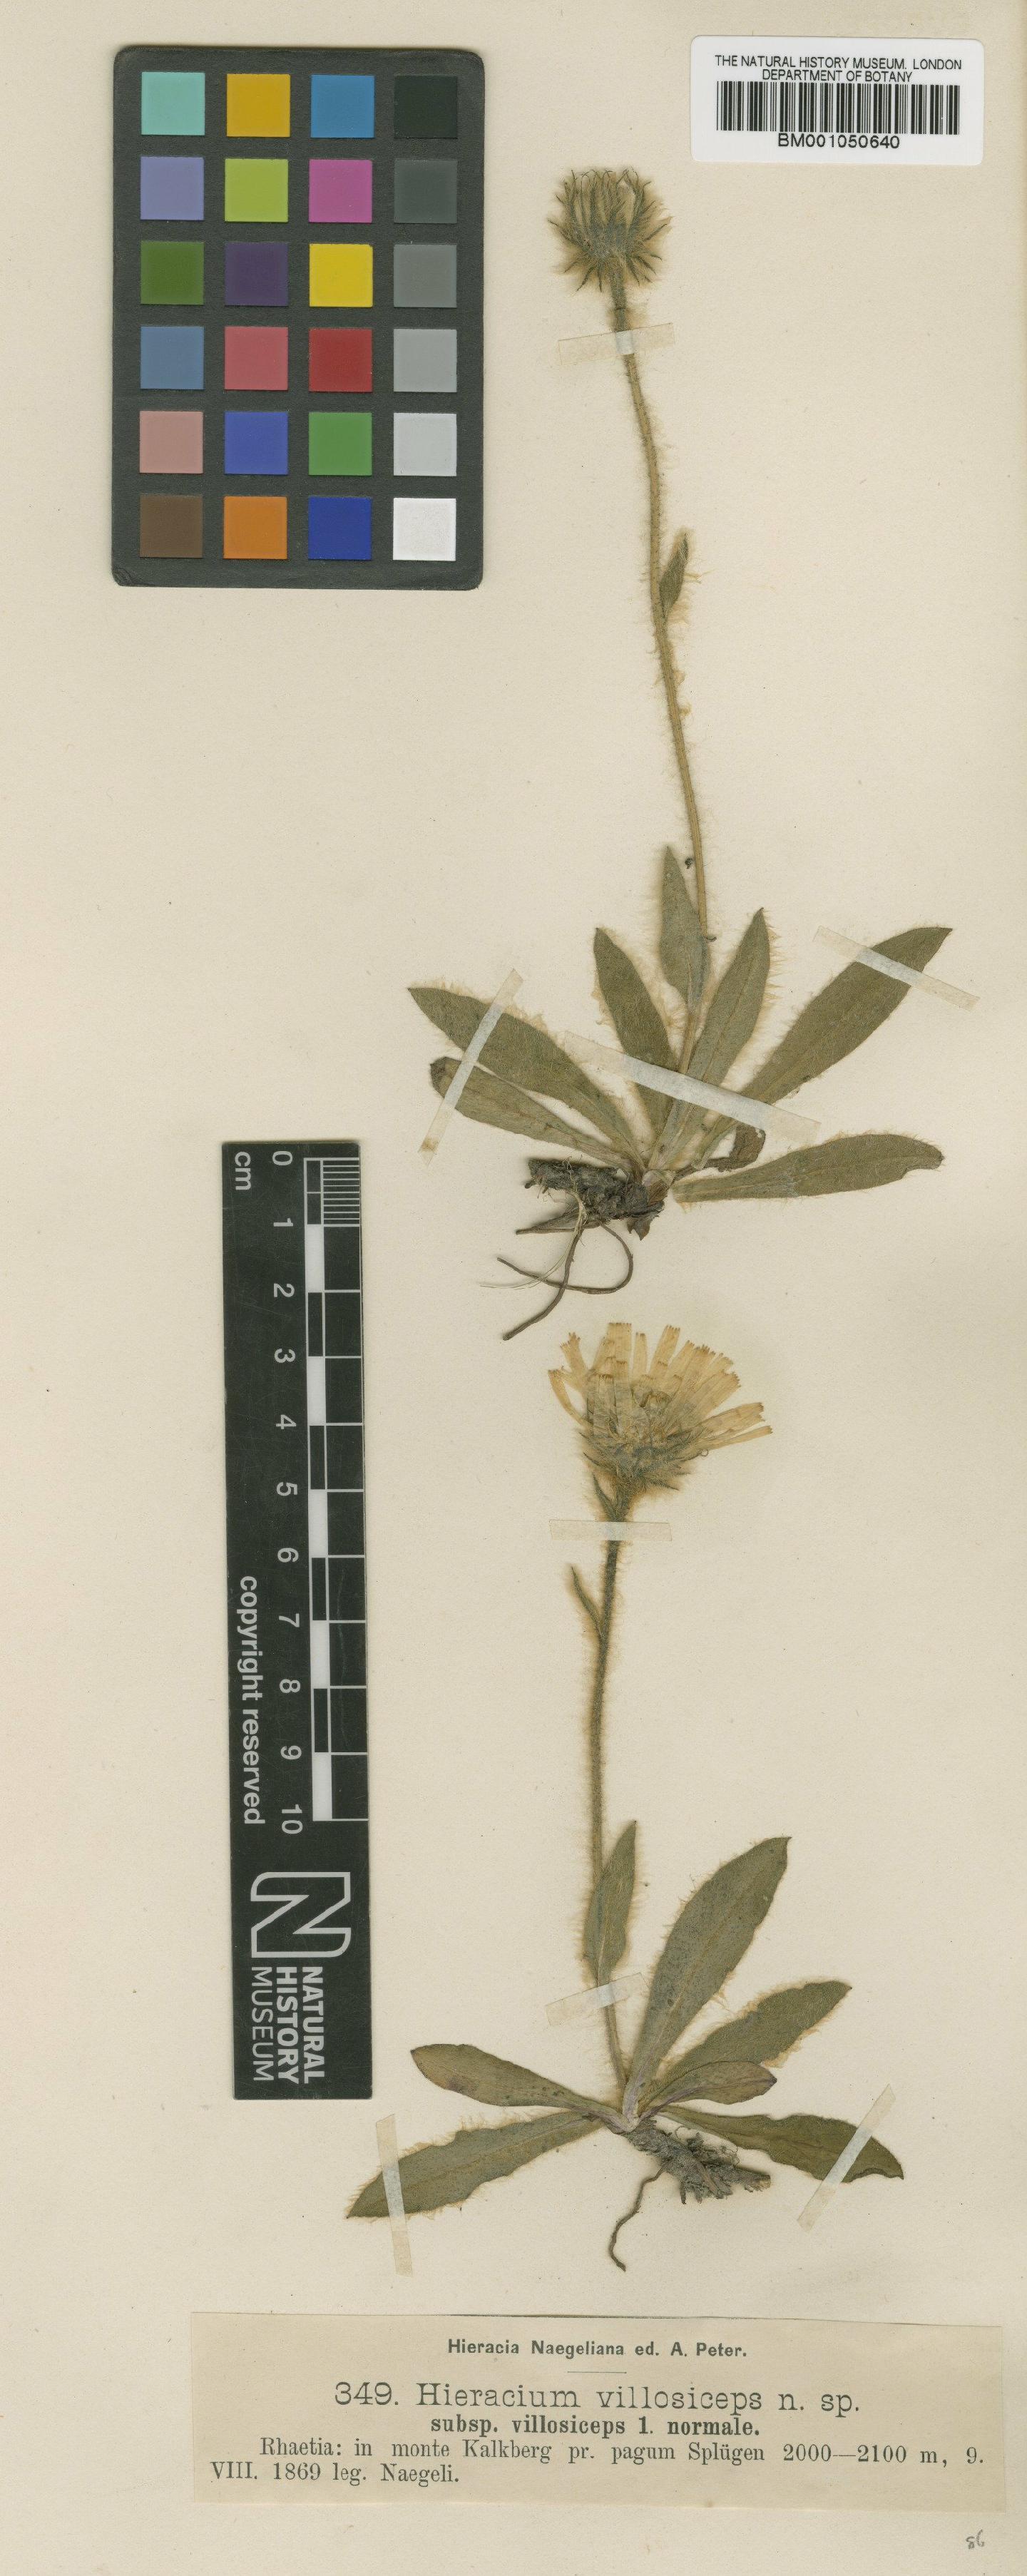 To NHMUK collection (Hieracium morisianum subsp. villosiceps Nägeli & Peter; TYPE; NHMUK:ecatalogue:2396776)